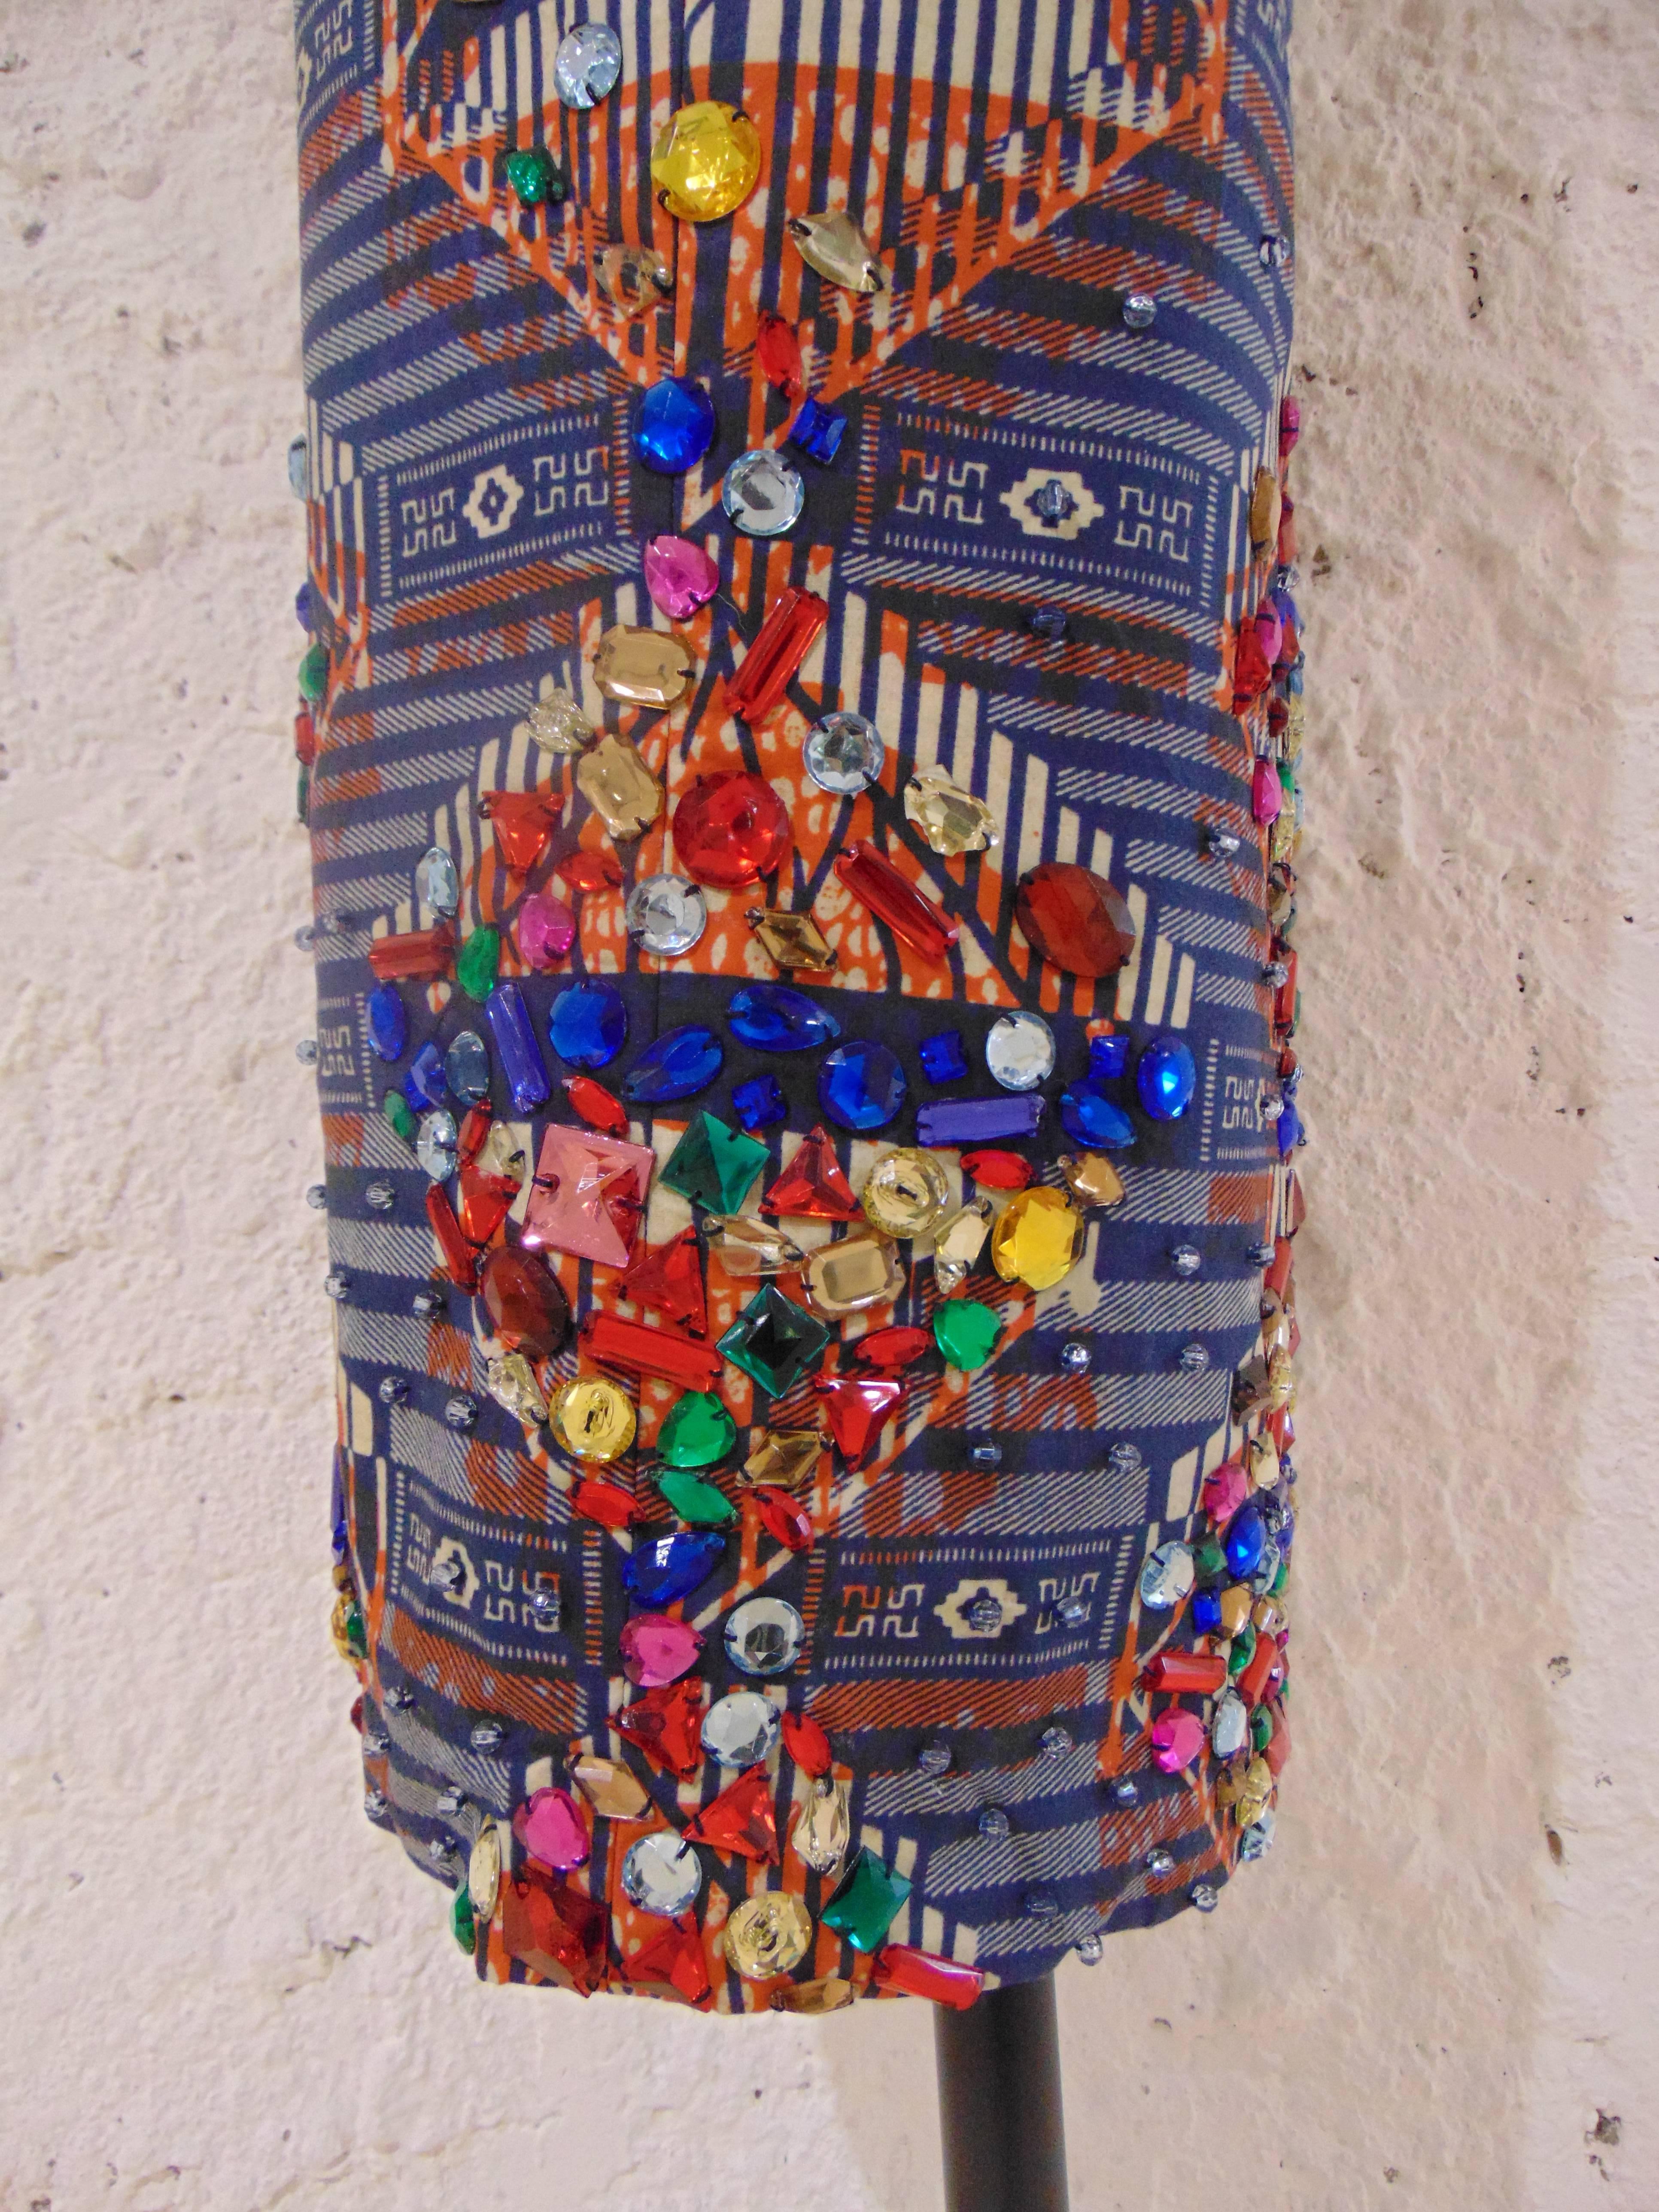 Stella Jean multicoloured swarovski skirt NWOT

totally made in italy in size 40

